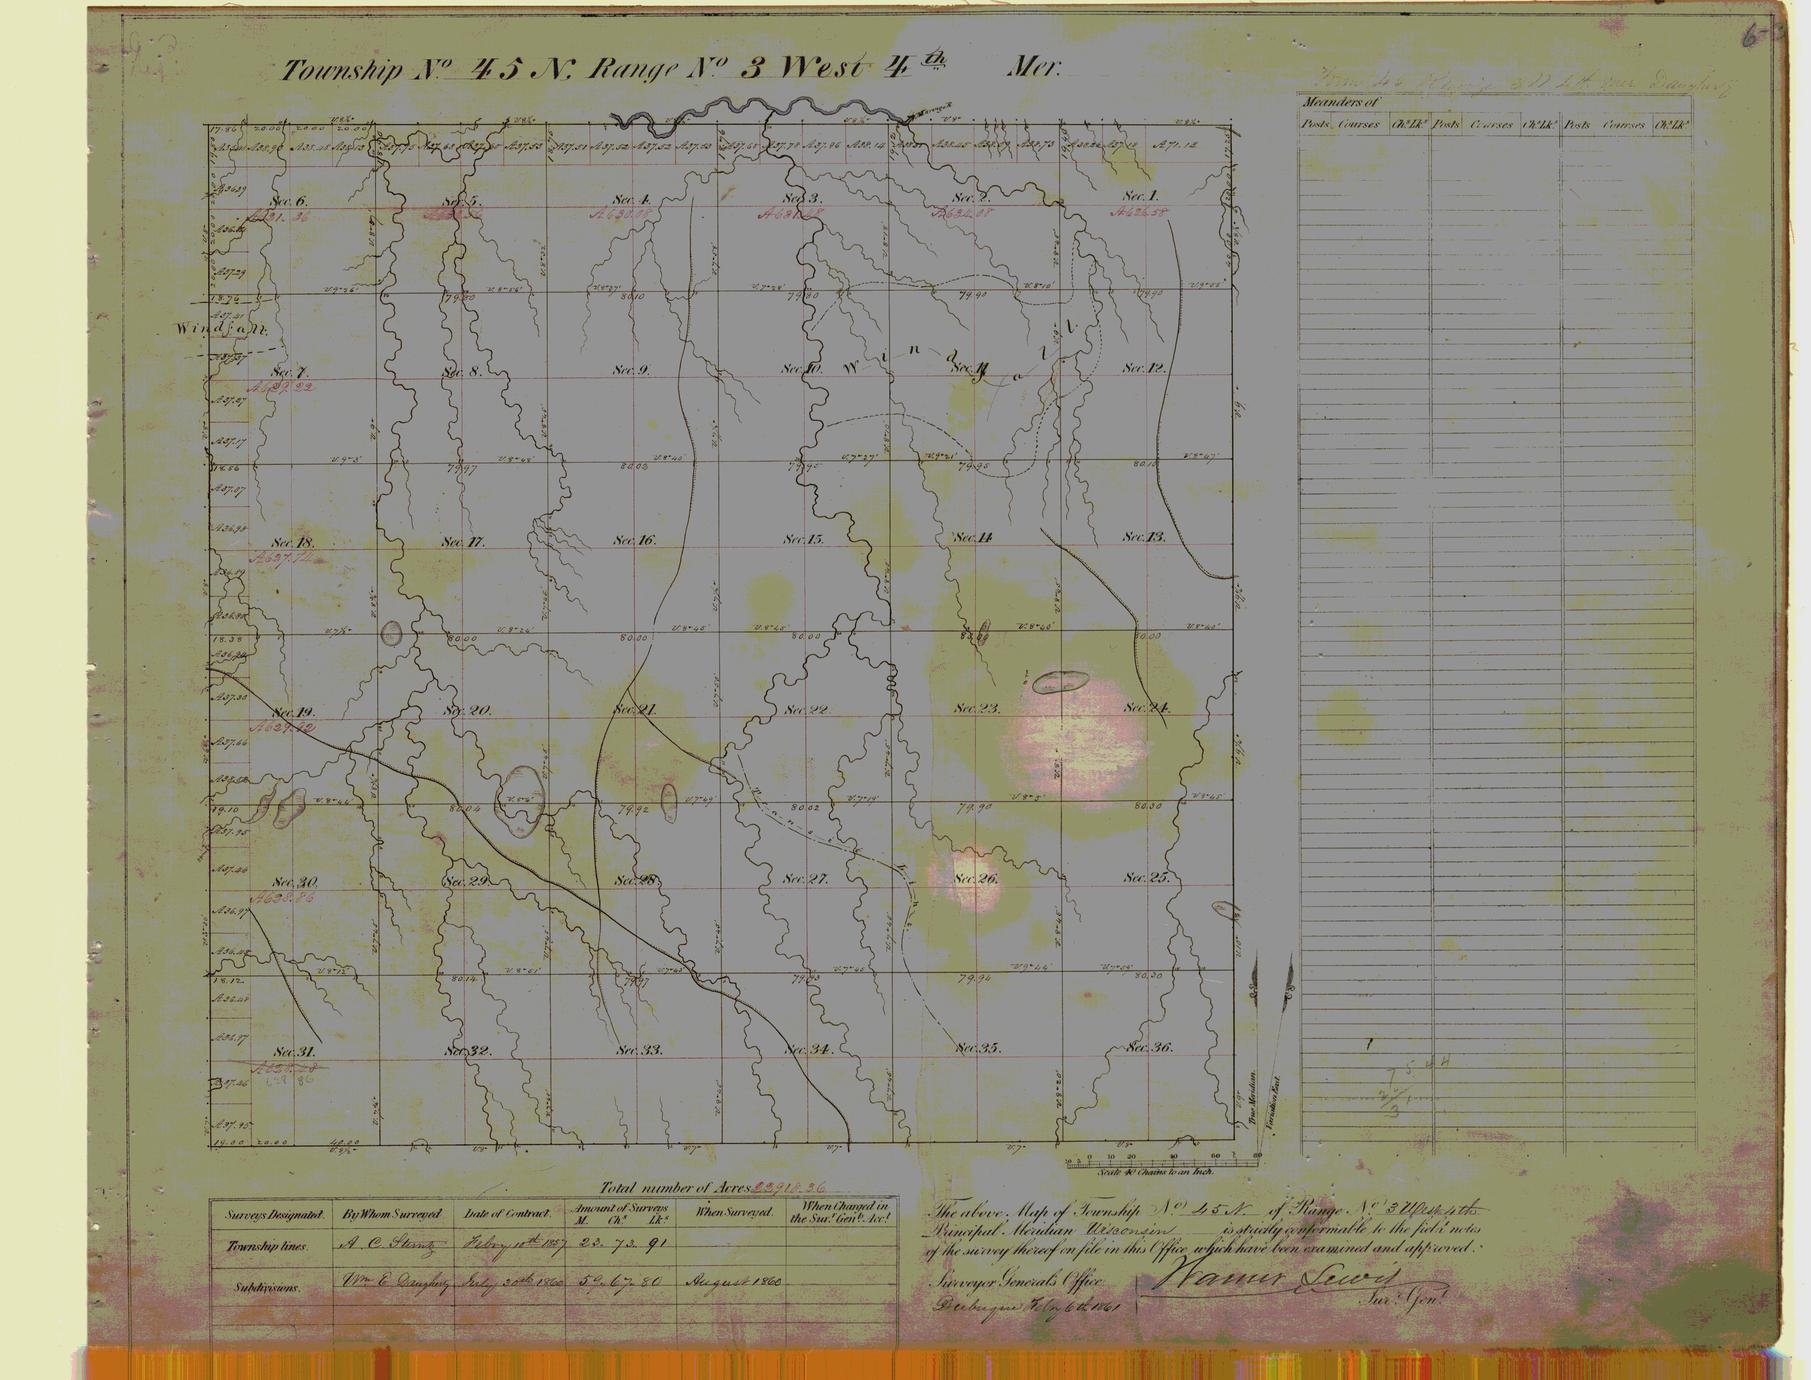 [Public Land Survey System map: Wisconsin Township 45 North, Range 03 West]